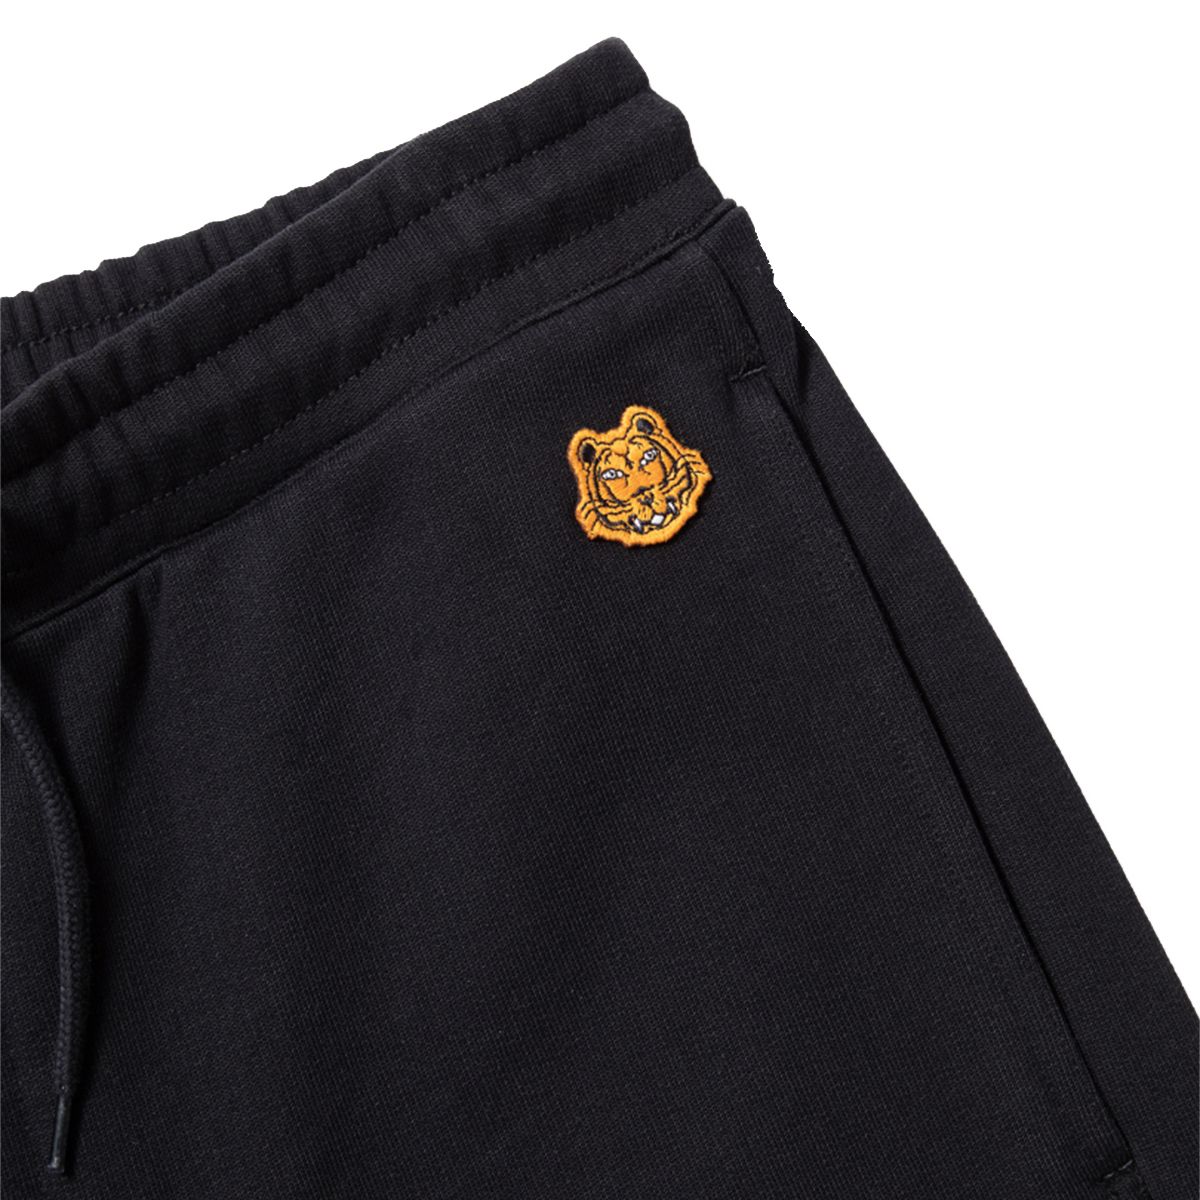 K-Tiger Cotton Sweatpants Black